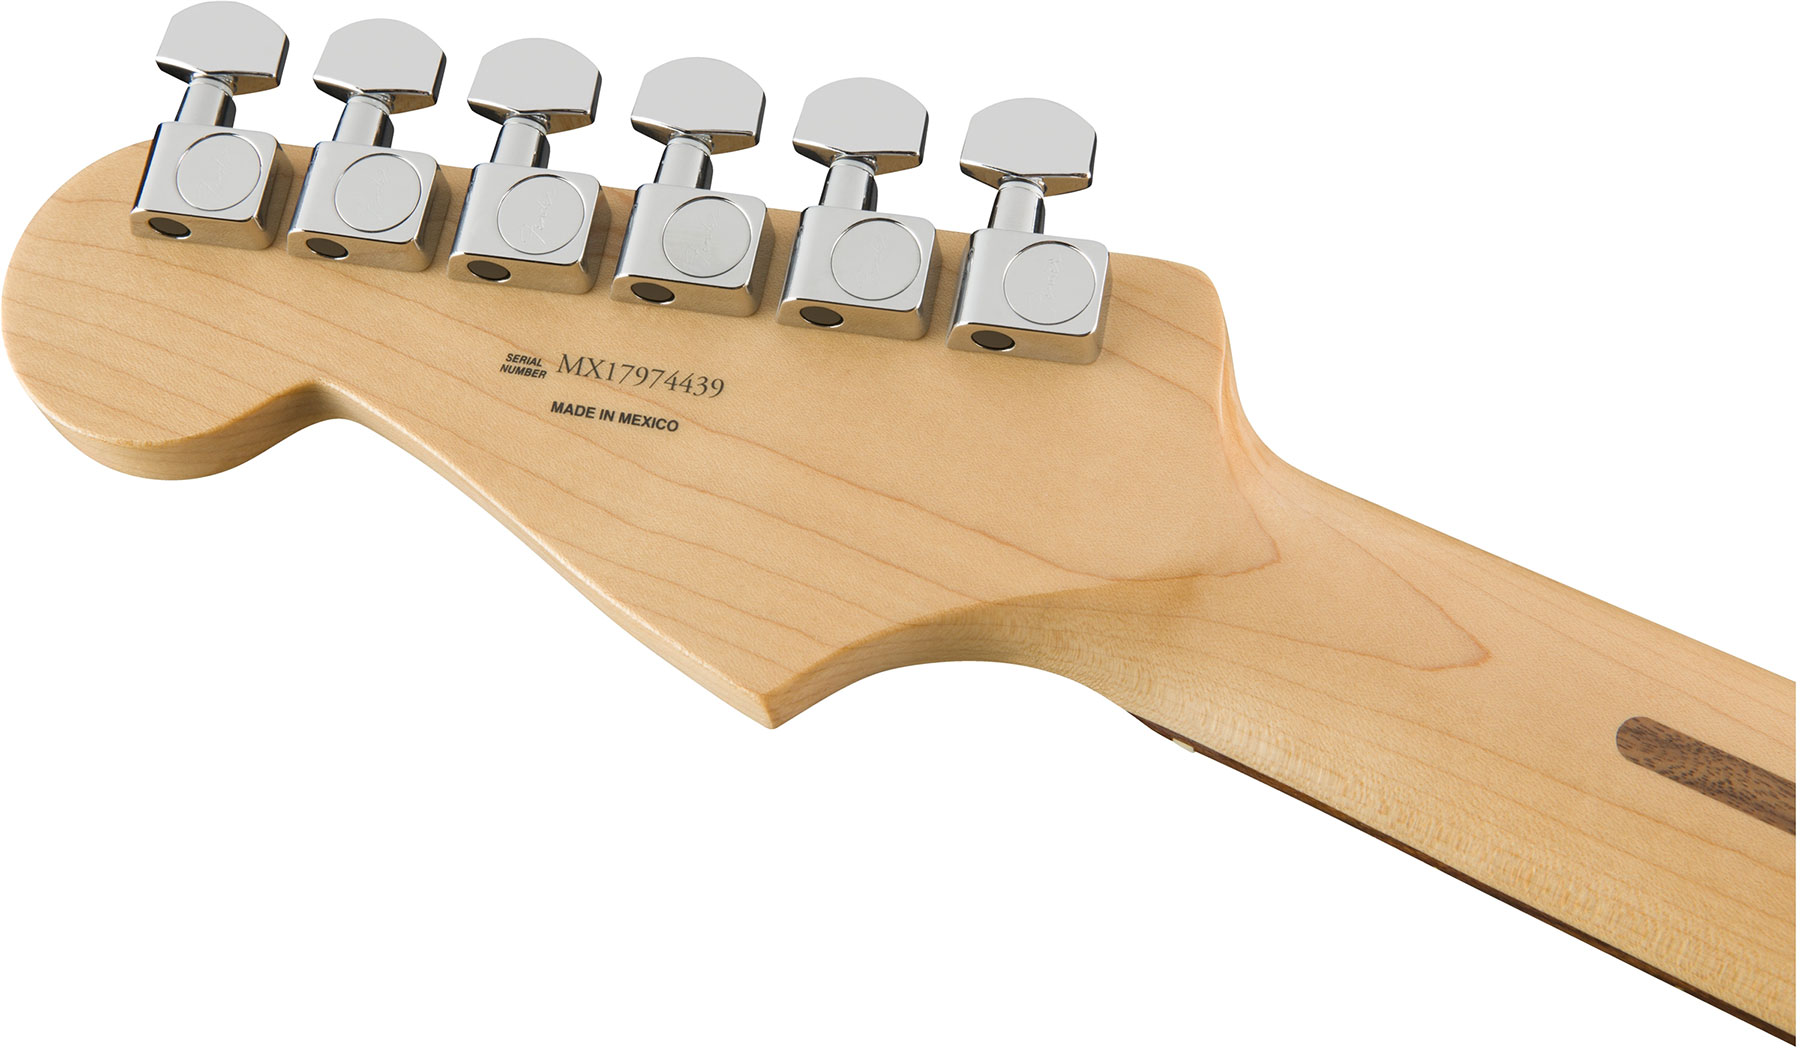 Fender Strat Player Mex Sss Pf - Polar White - Str shape electric guitar - Variation 4